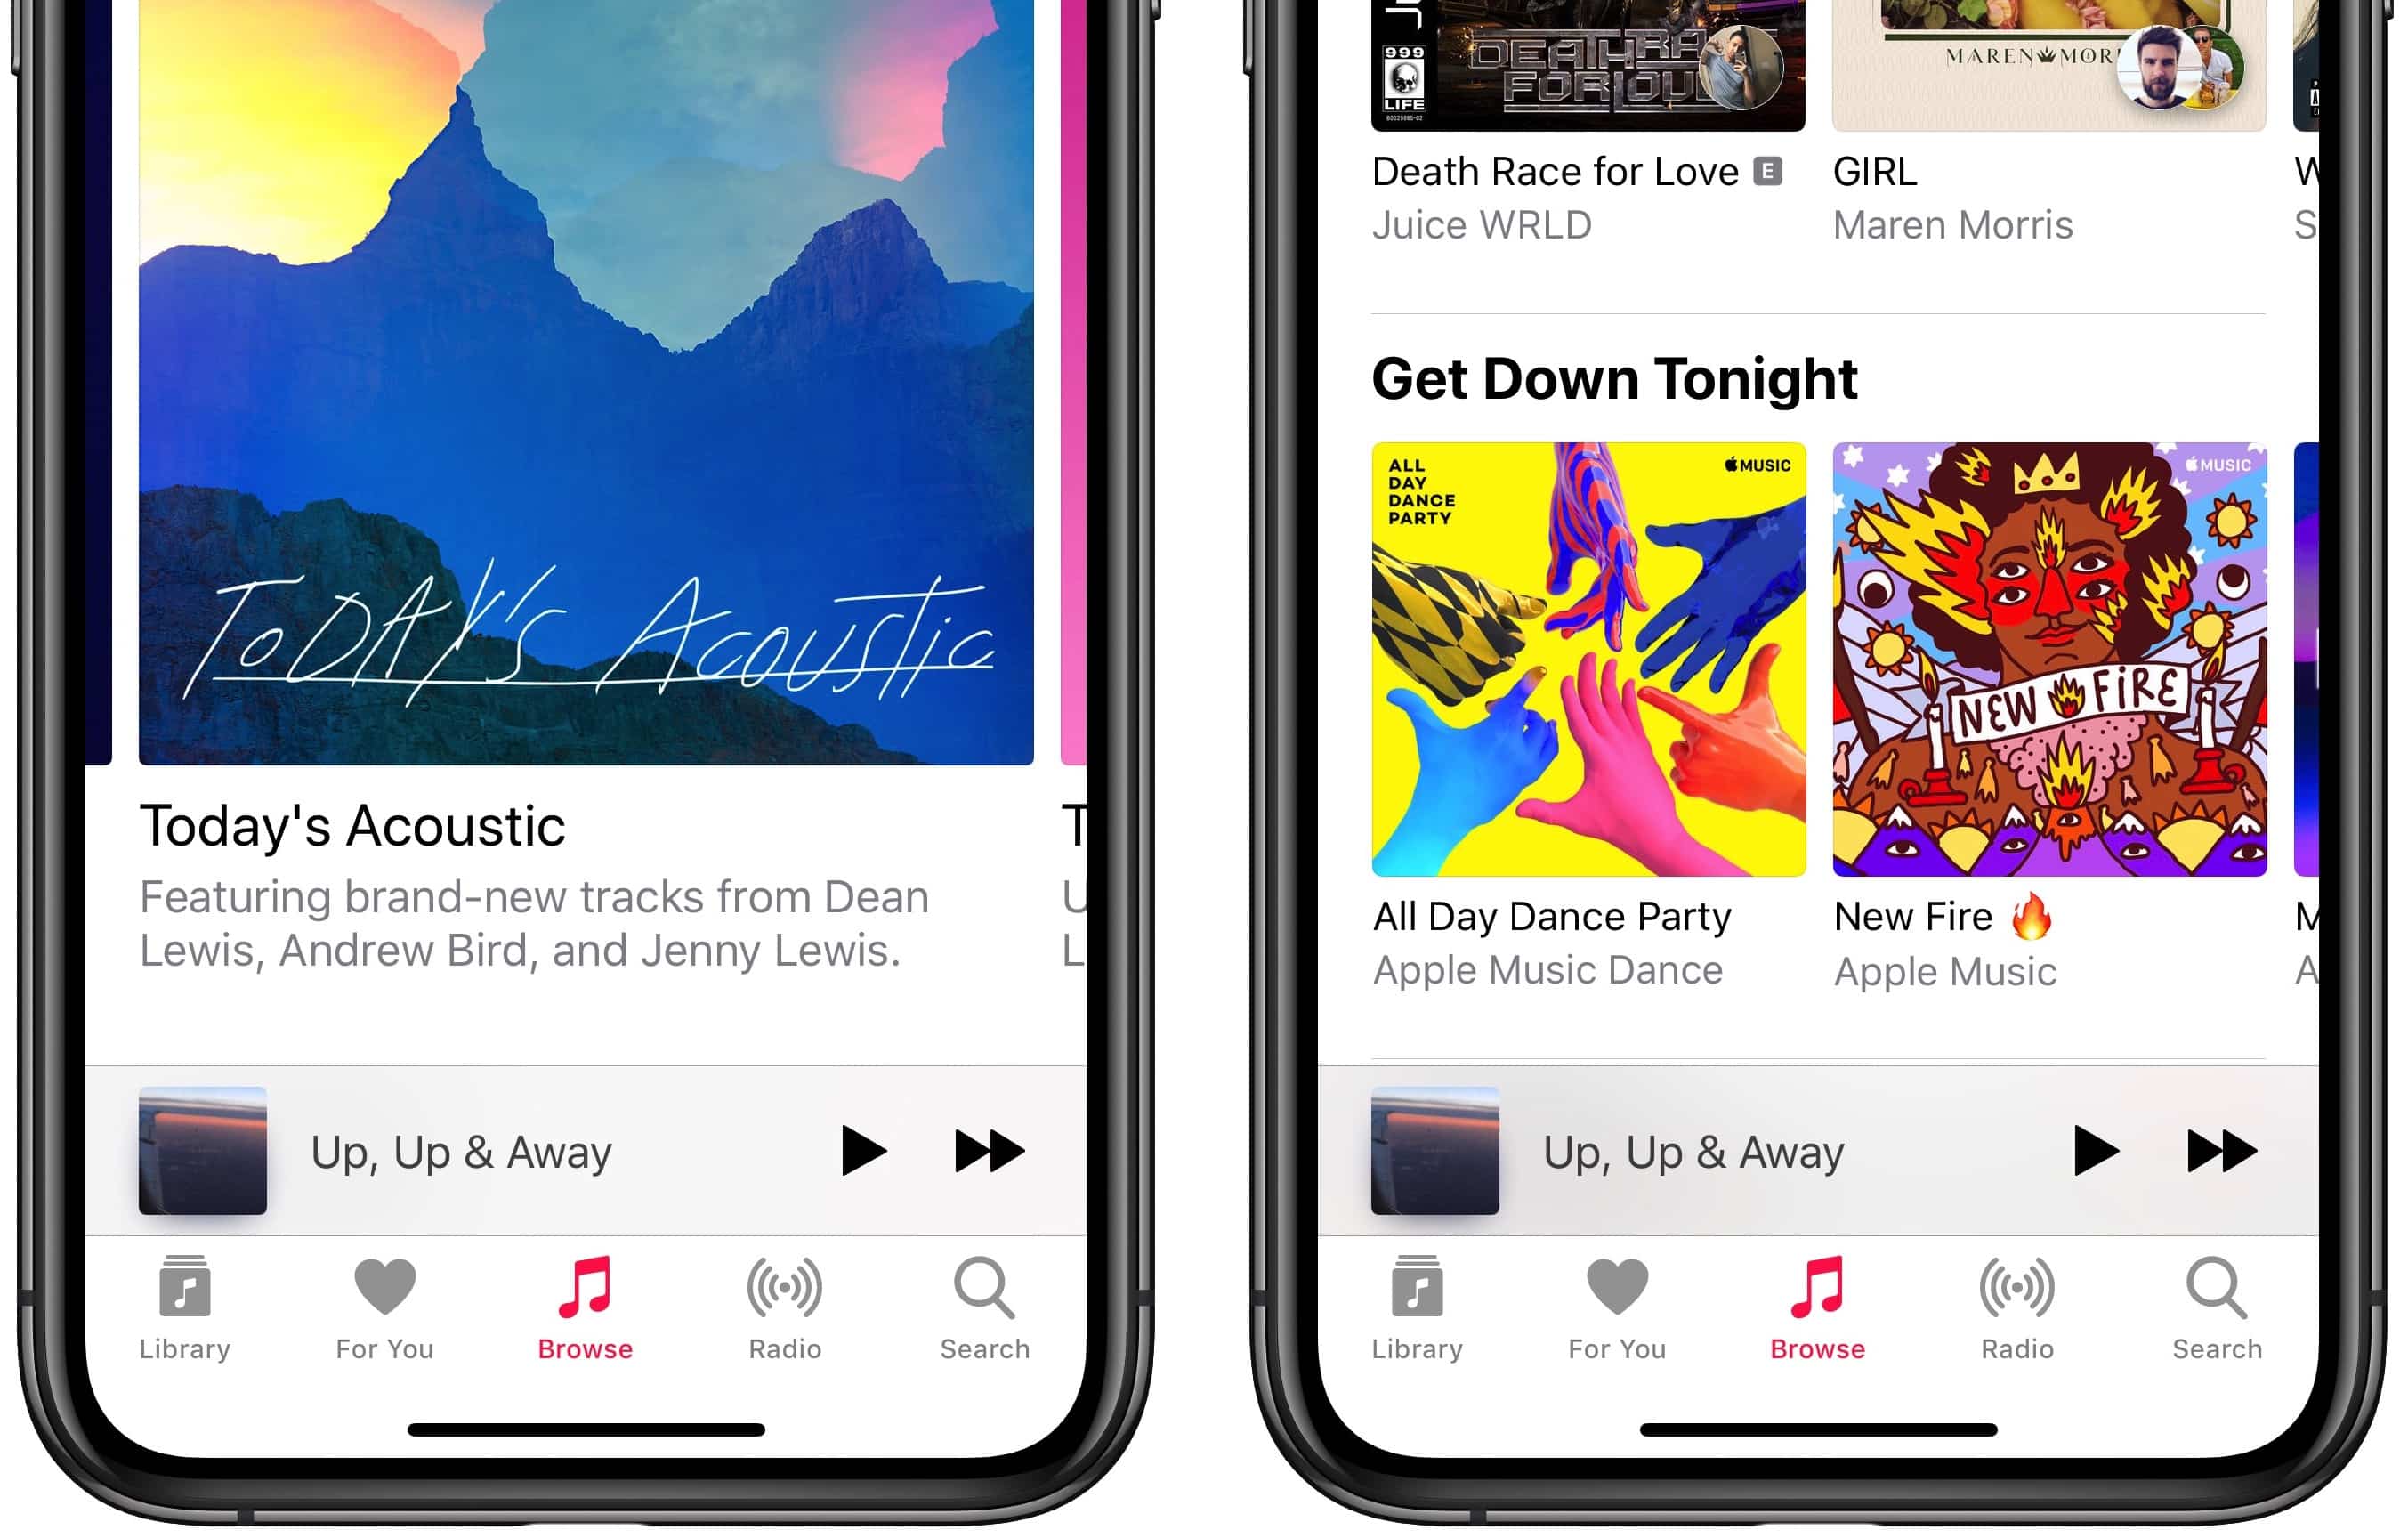 Apple Music brand intimacy